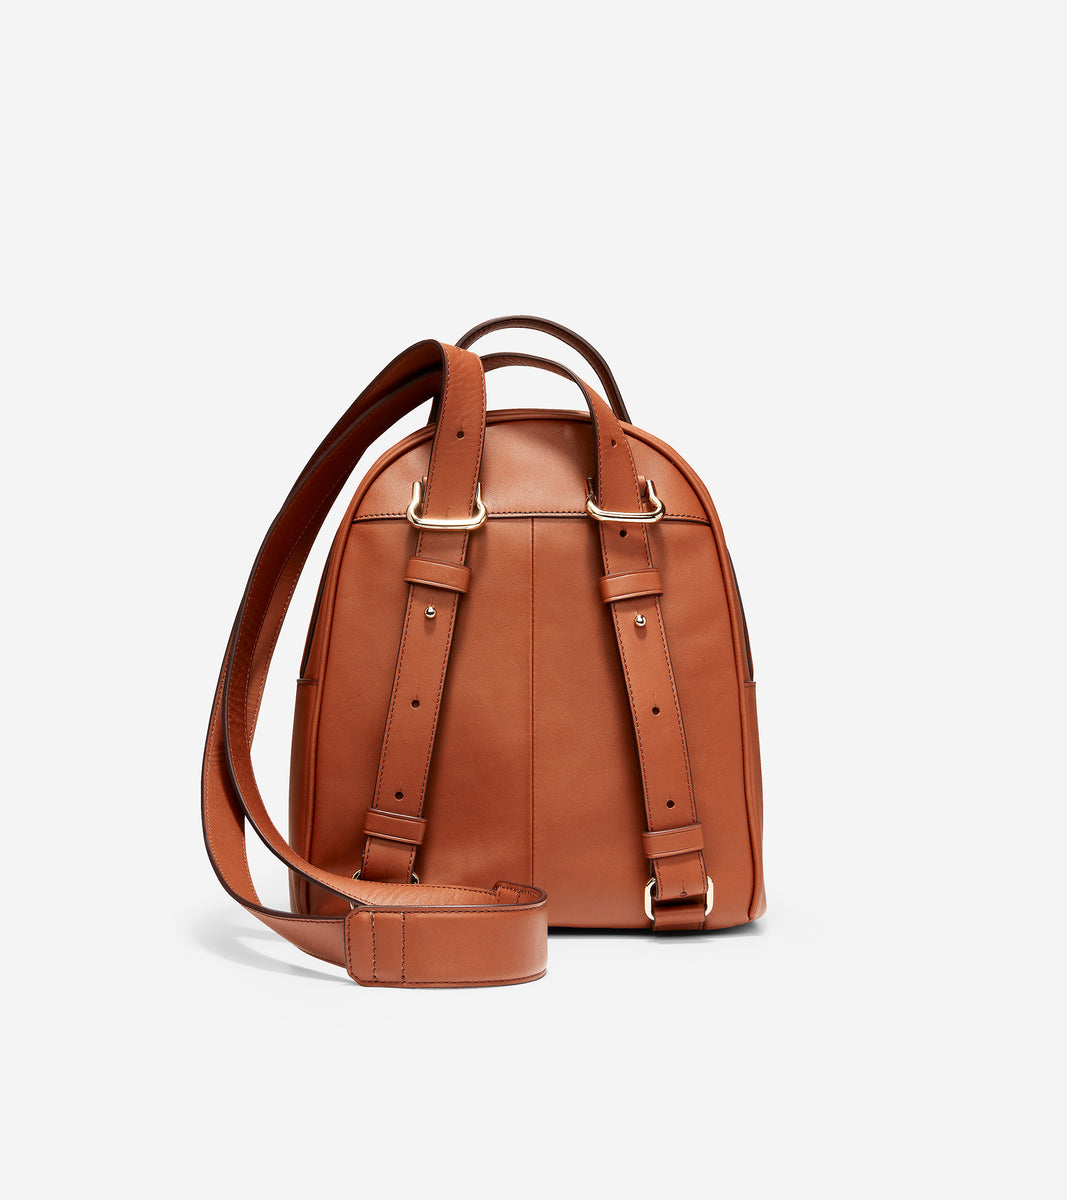 ColeHaan-Grand Ambition Mini Backpack-u04344-British Tan Leather